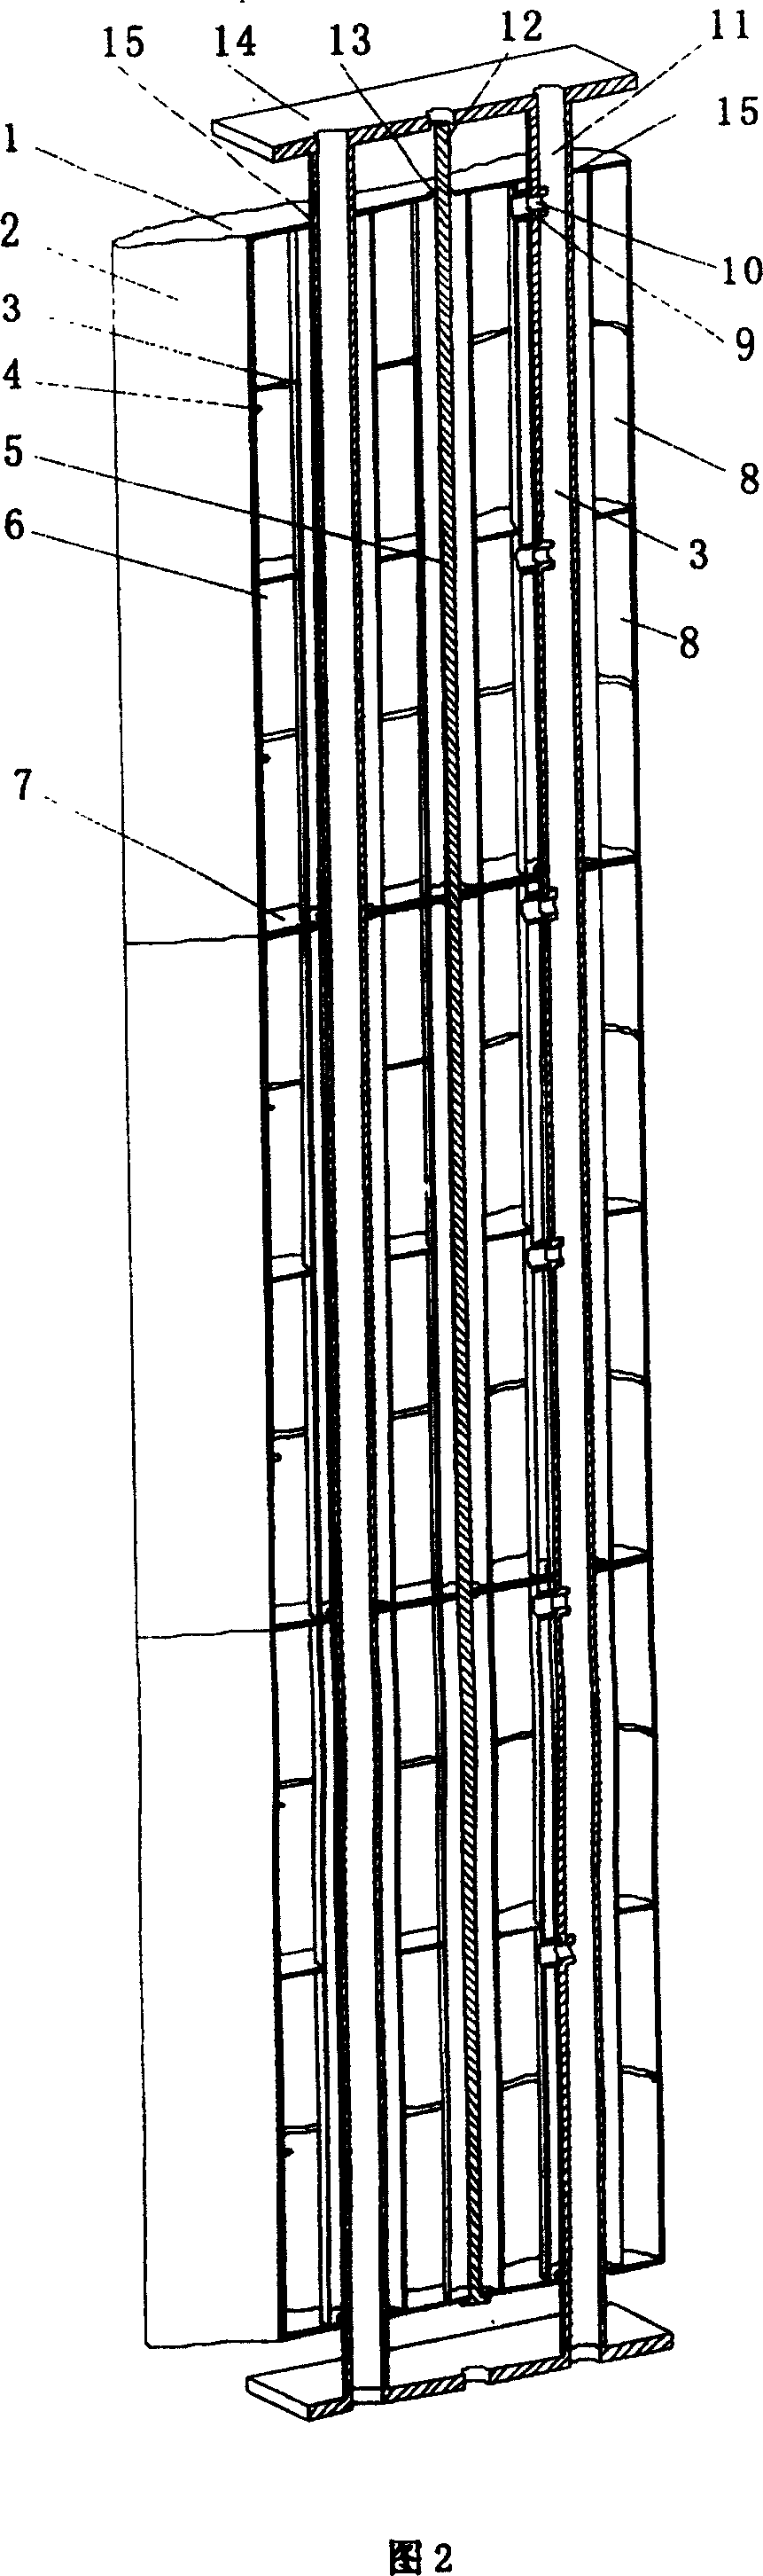 Wing panels of aeration blower fan